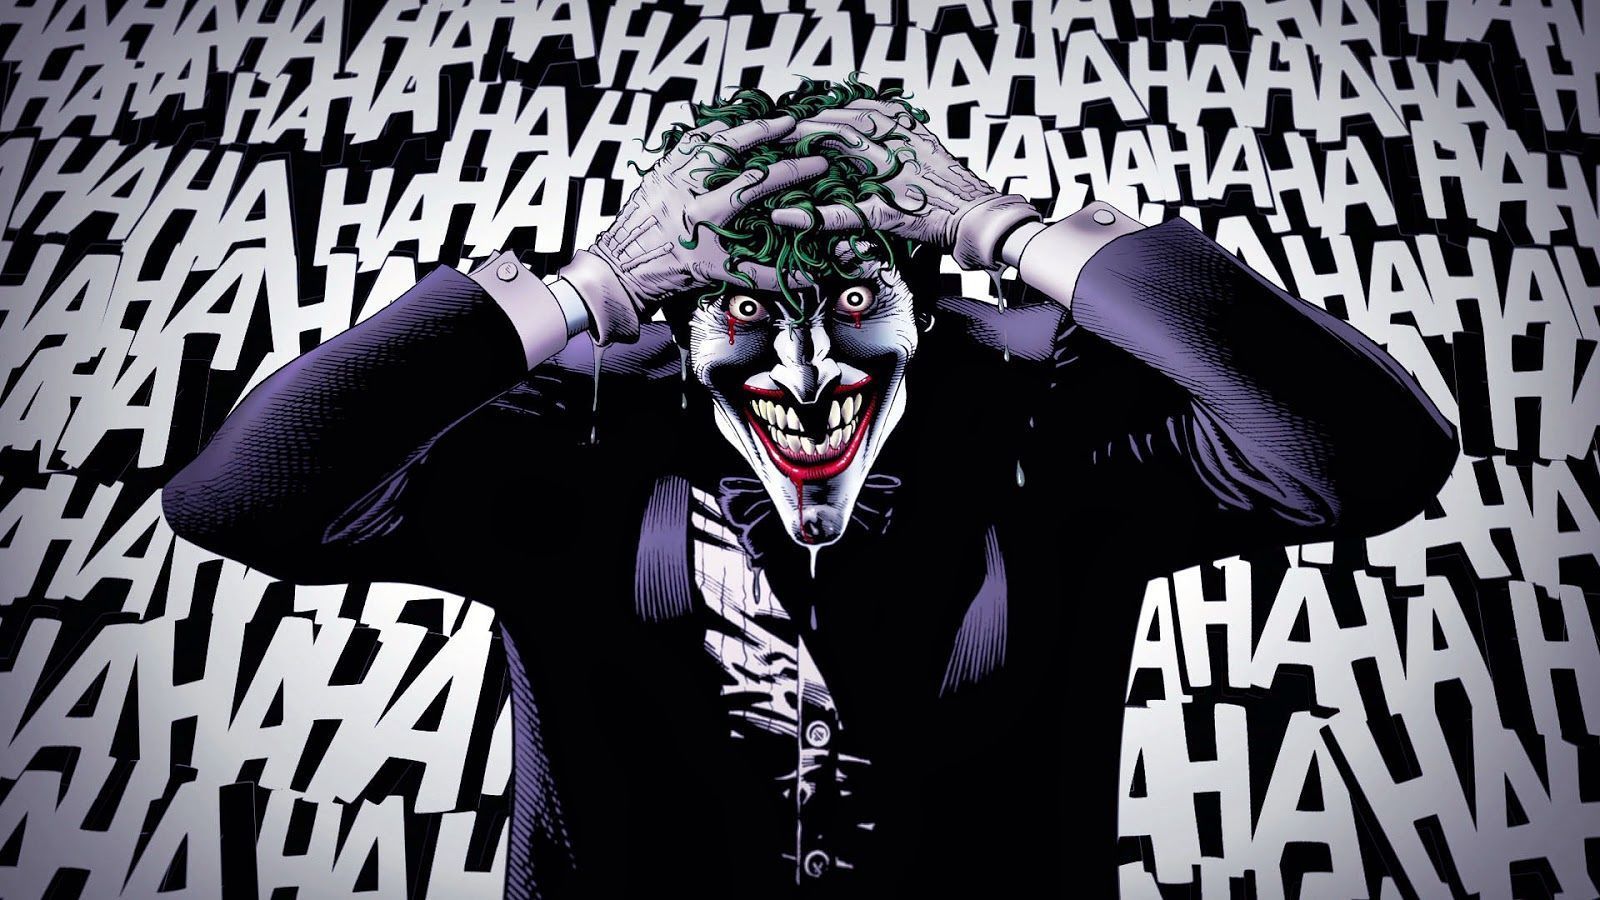 Joker snaps in The Killing Joke